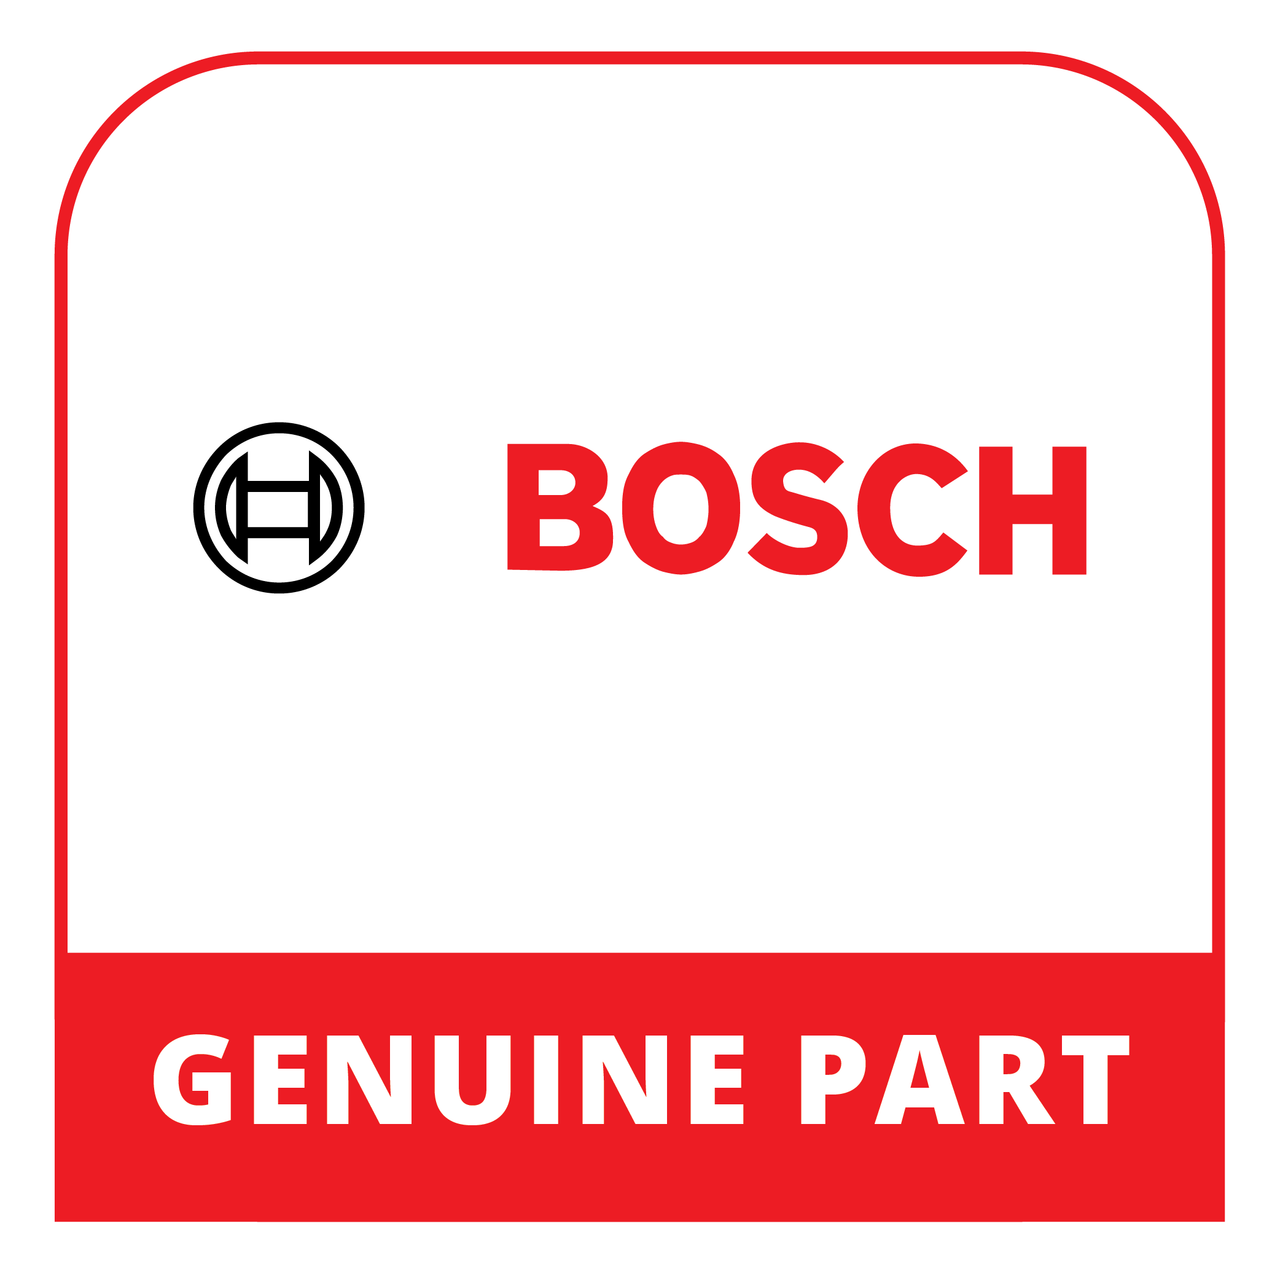 Bosch 11009495 - Actuator - Genuine Bosch (Thermador) Part